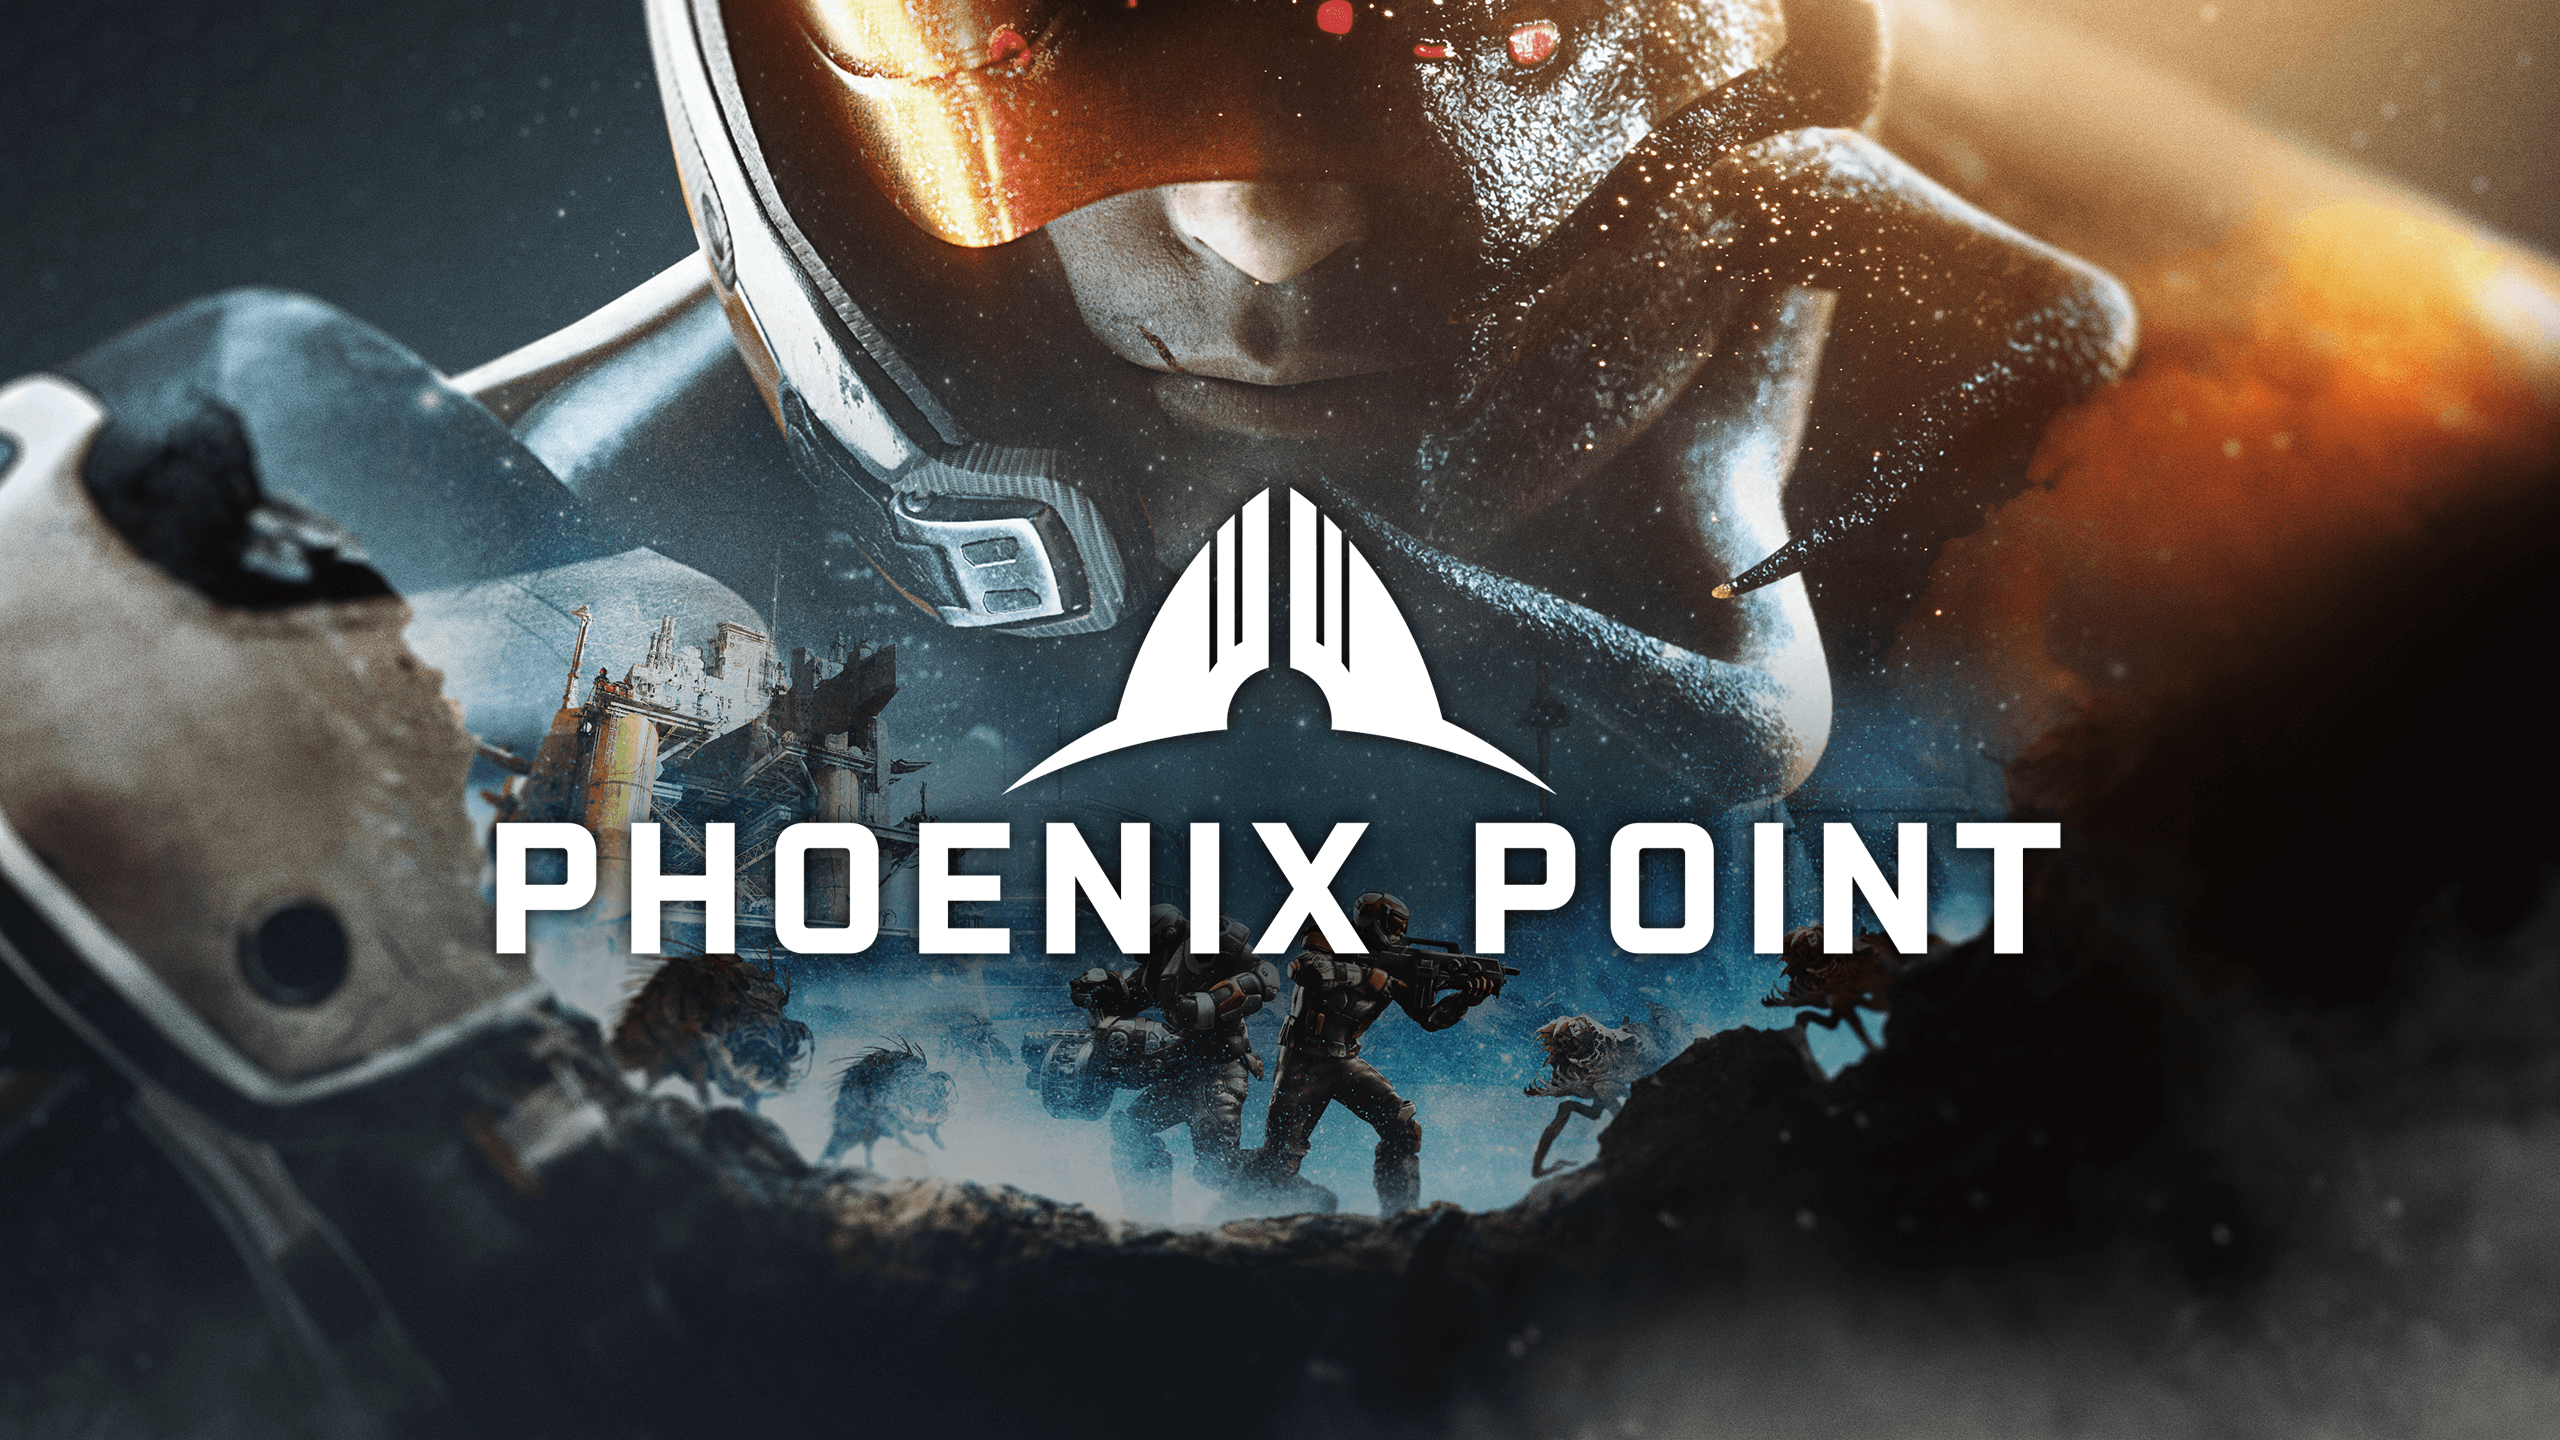 download phoenix point behemoth edition ps4